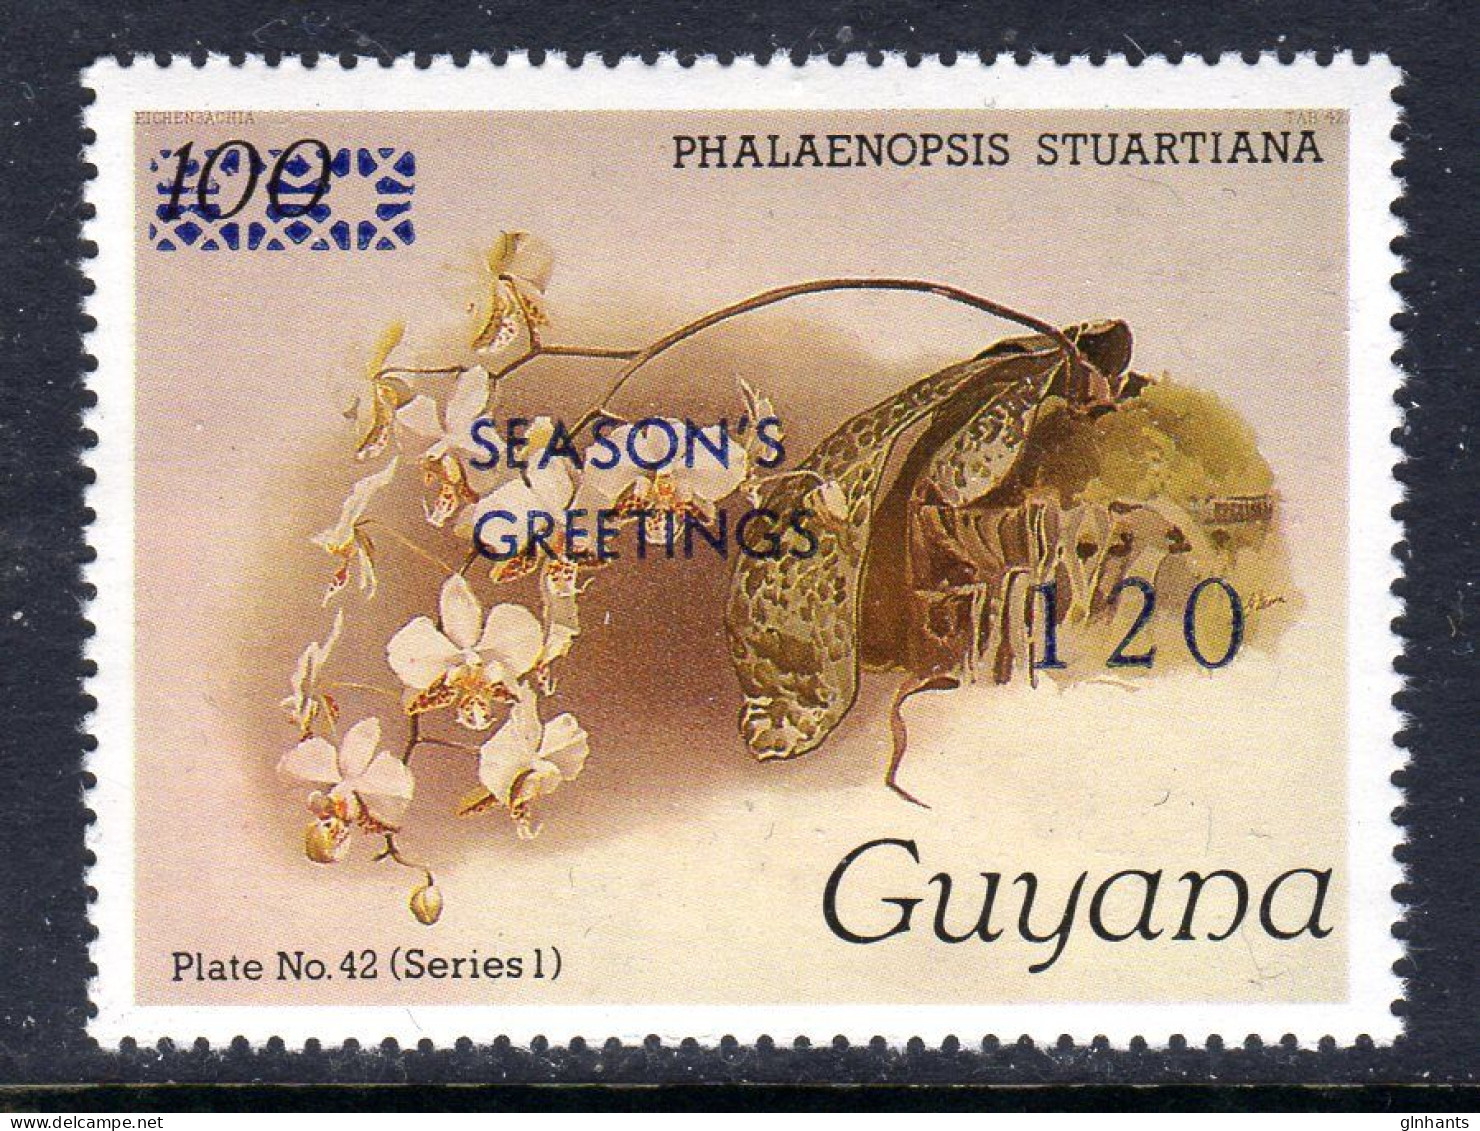 GUYANA - 1988 REICHENBACHIA ORCHIDS OVERPRINTED SEASONS GREETINGS PLATE 42 SERIES 1 FINE MNH ** SG 2524 - Guiana (1966-...)